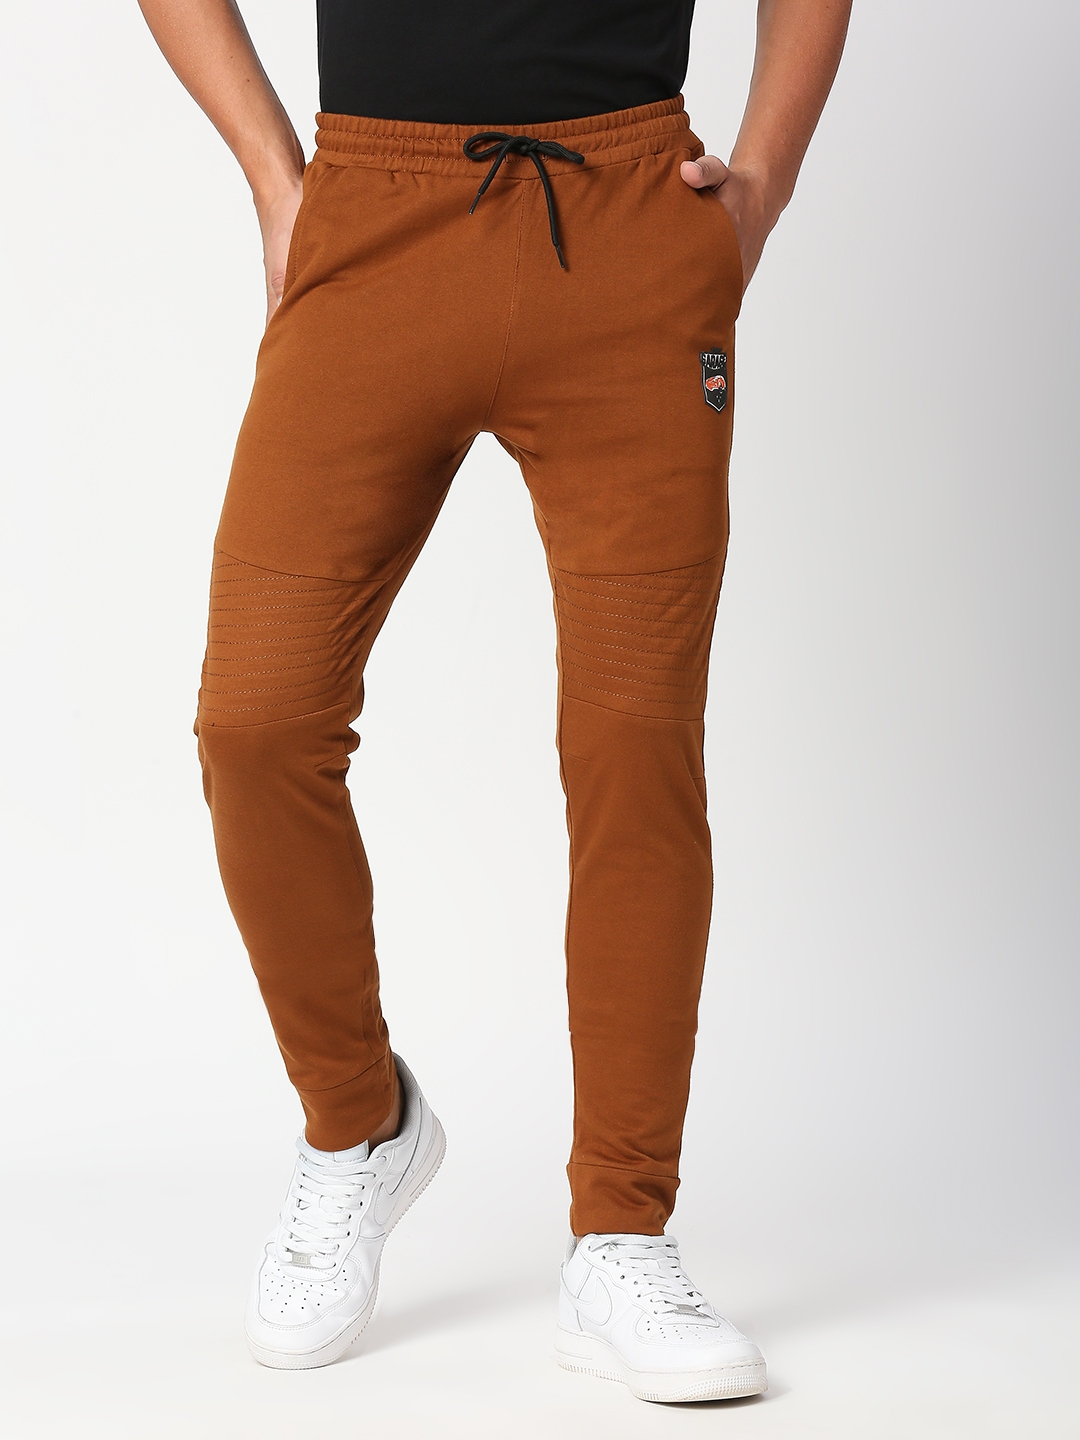 FITZ | Fitz Solids Cotton Blend Regular Fit Track Pants - Camel Brown